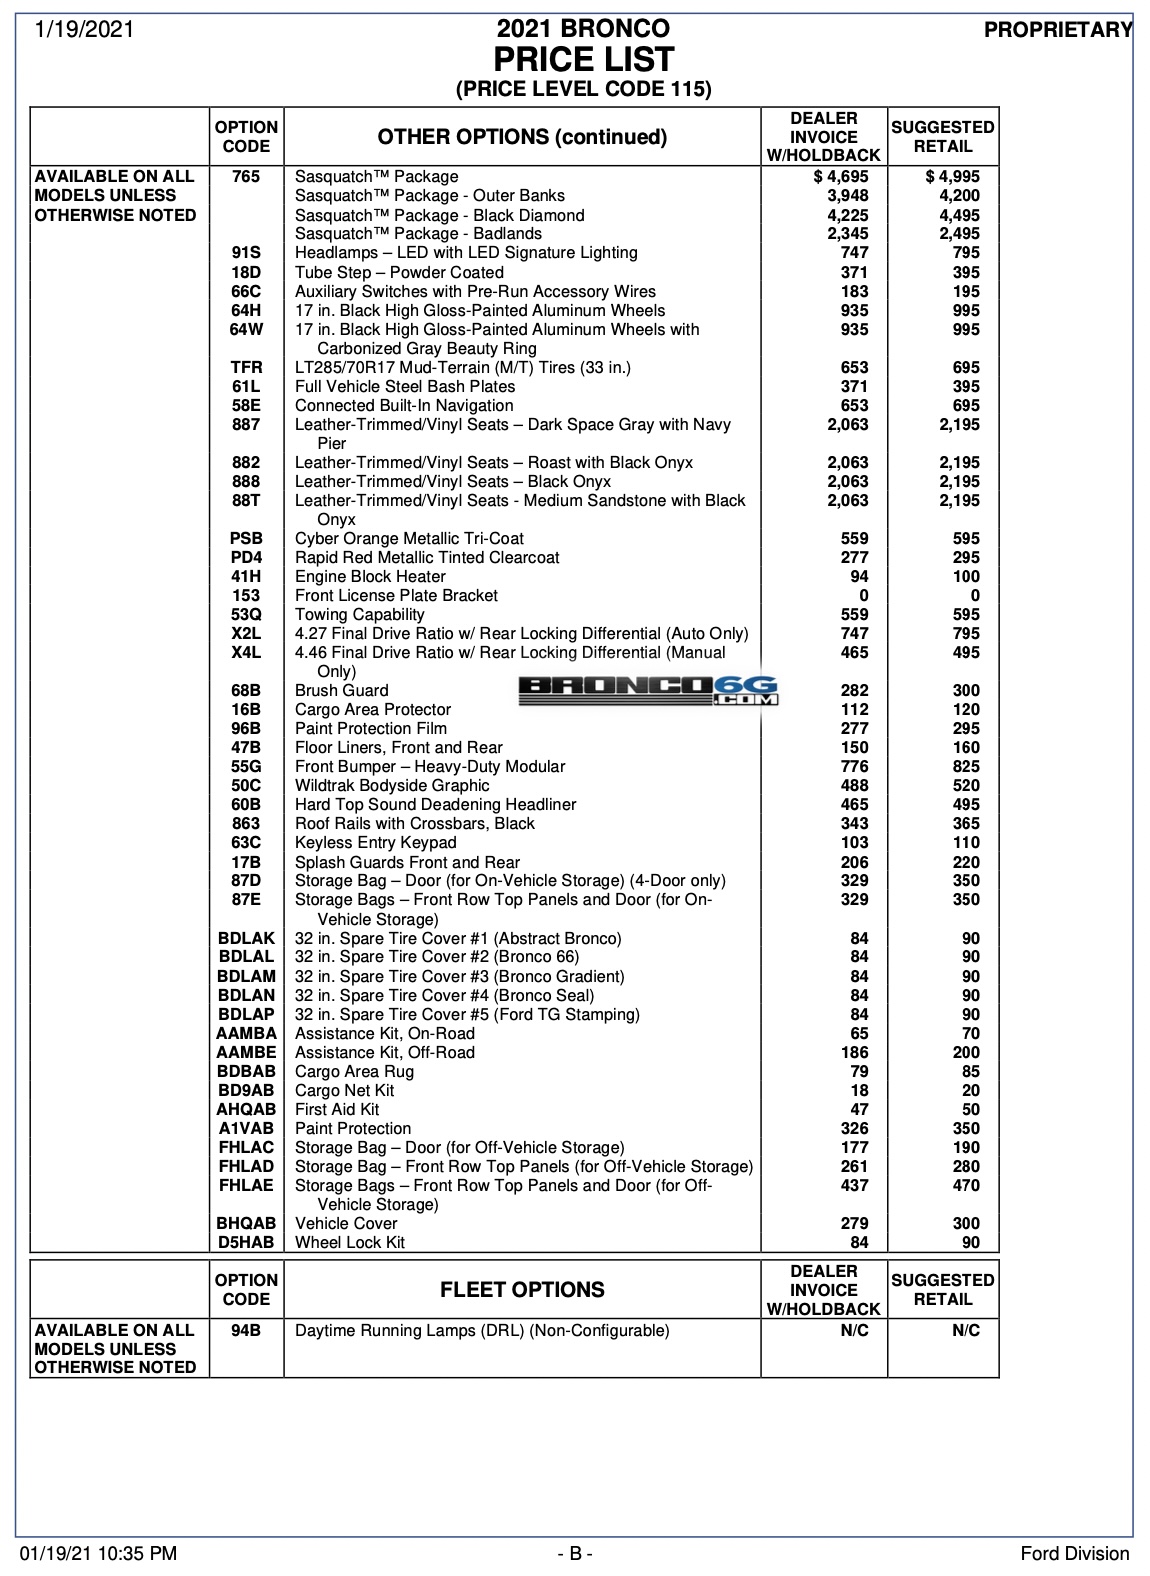 2021 Ford Bronco Invoice Price List MSRP 2.jpg